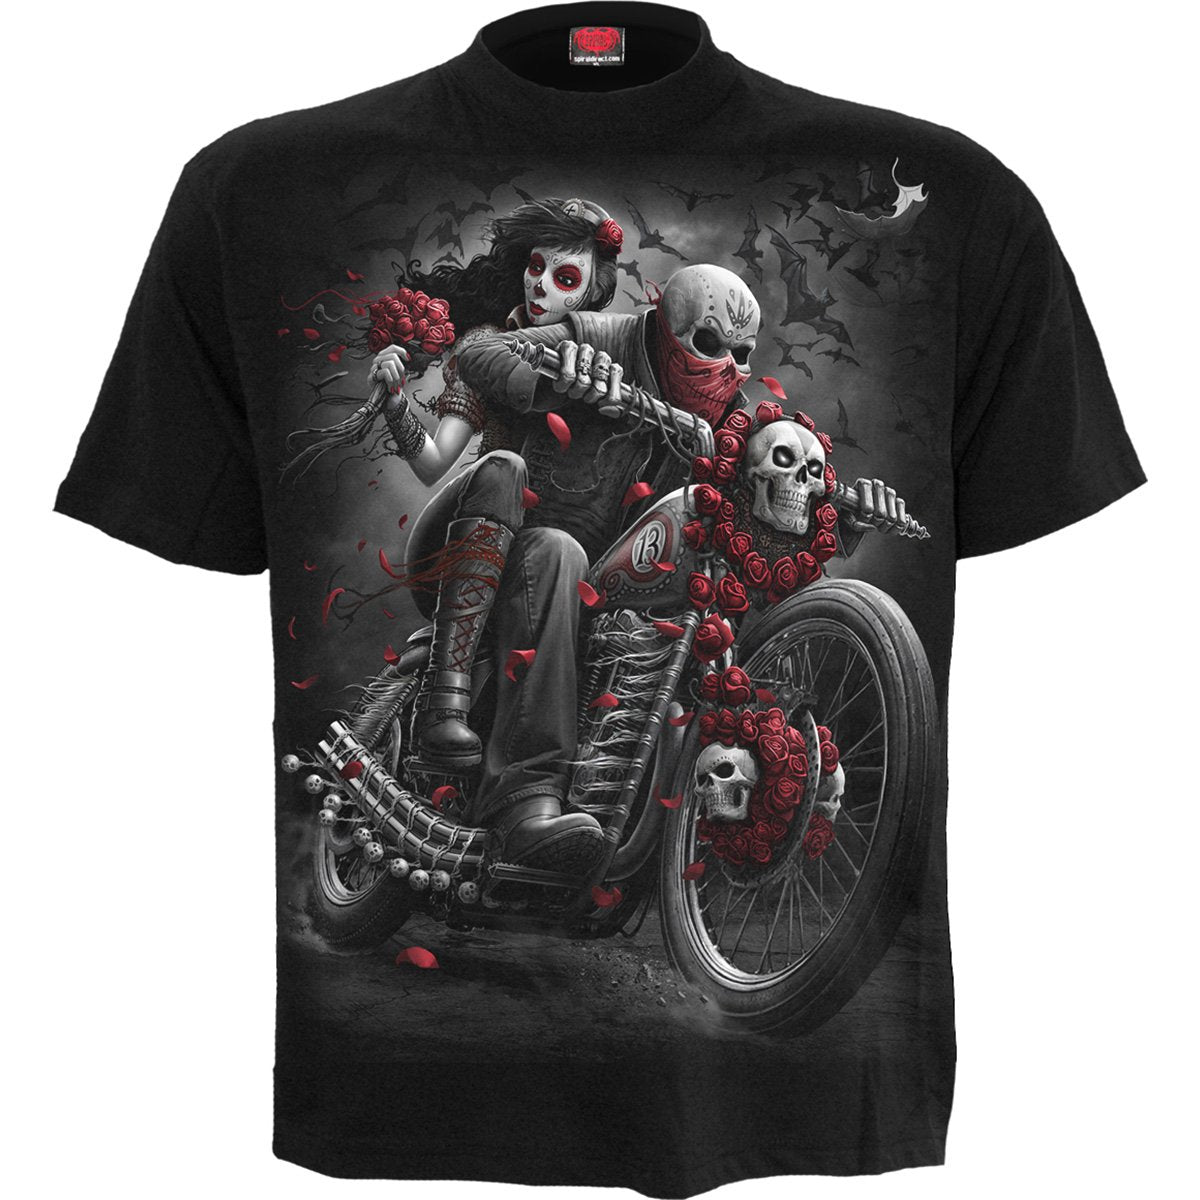 DOTD BIKERS - T-Shirt Black - Spiral USA